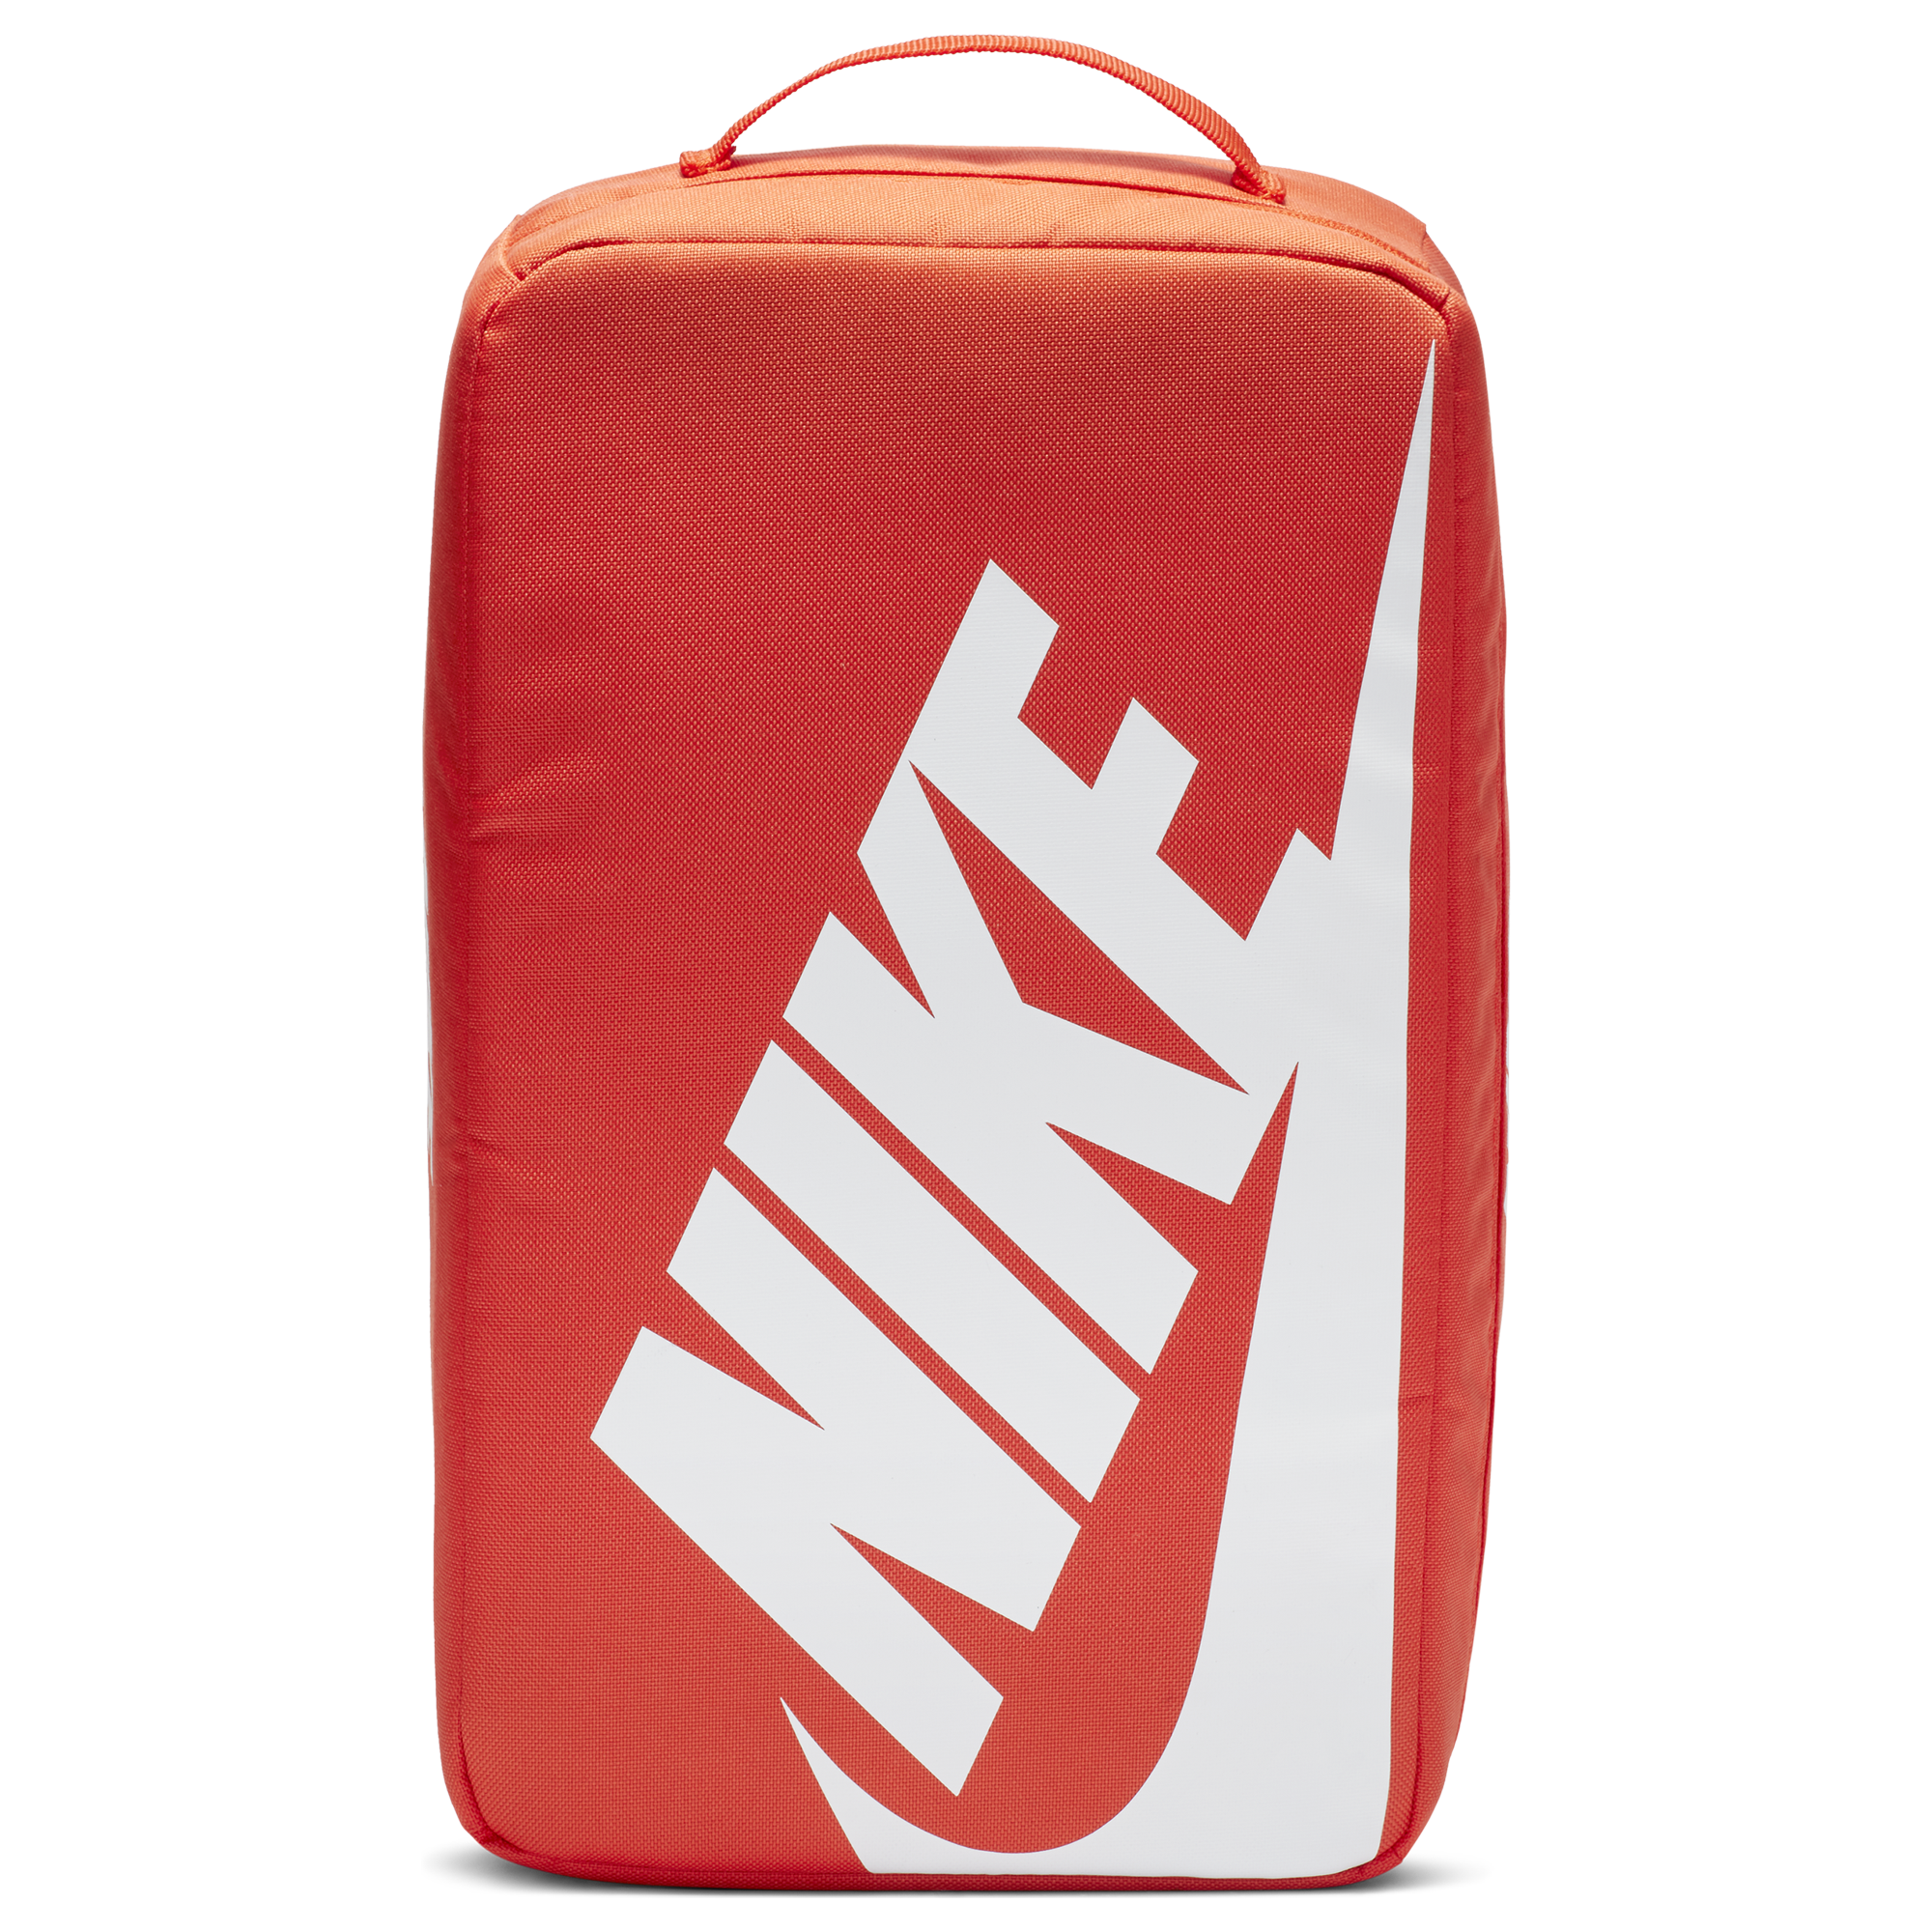 Nike Shoe Box Bag @ Footlocker